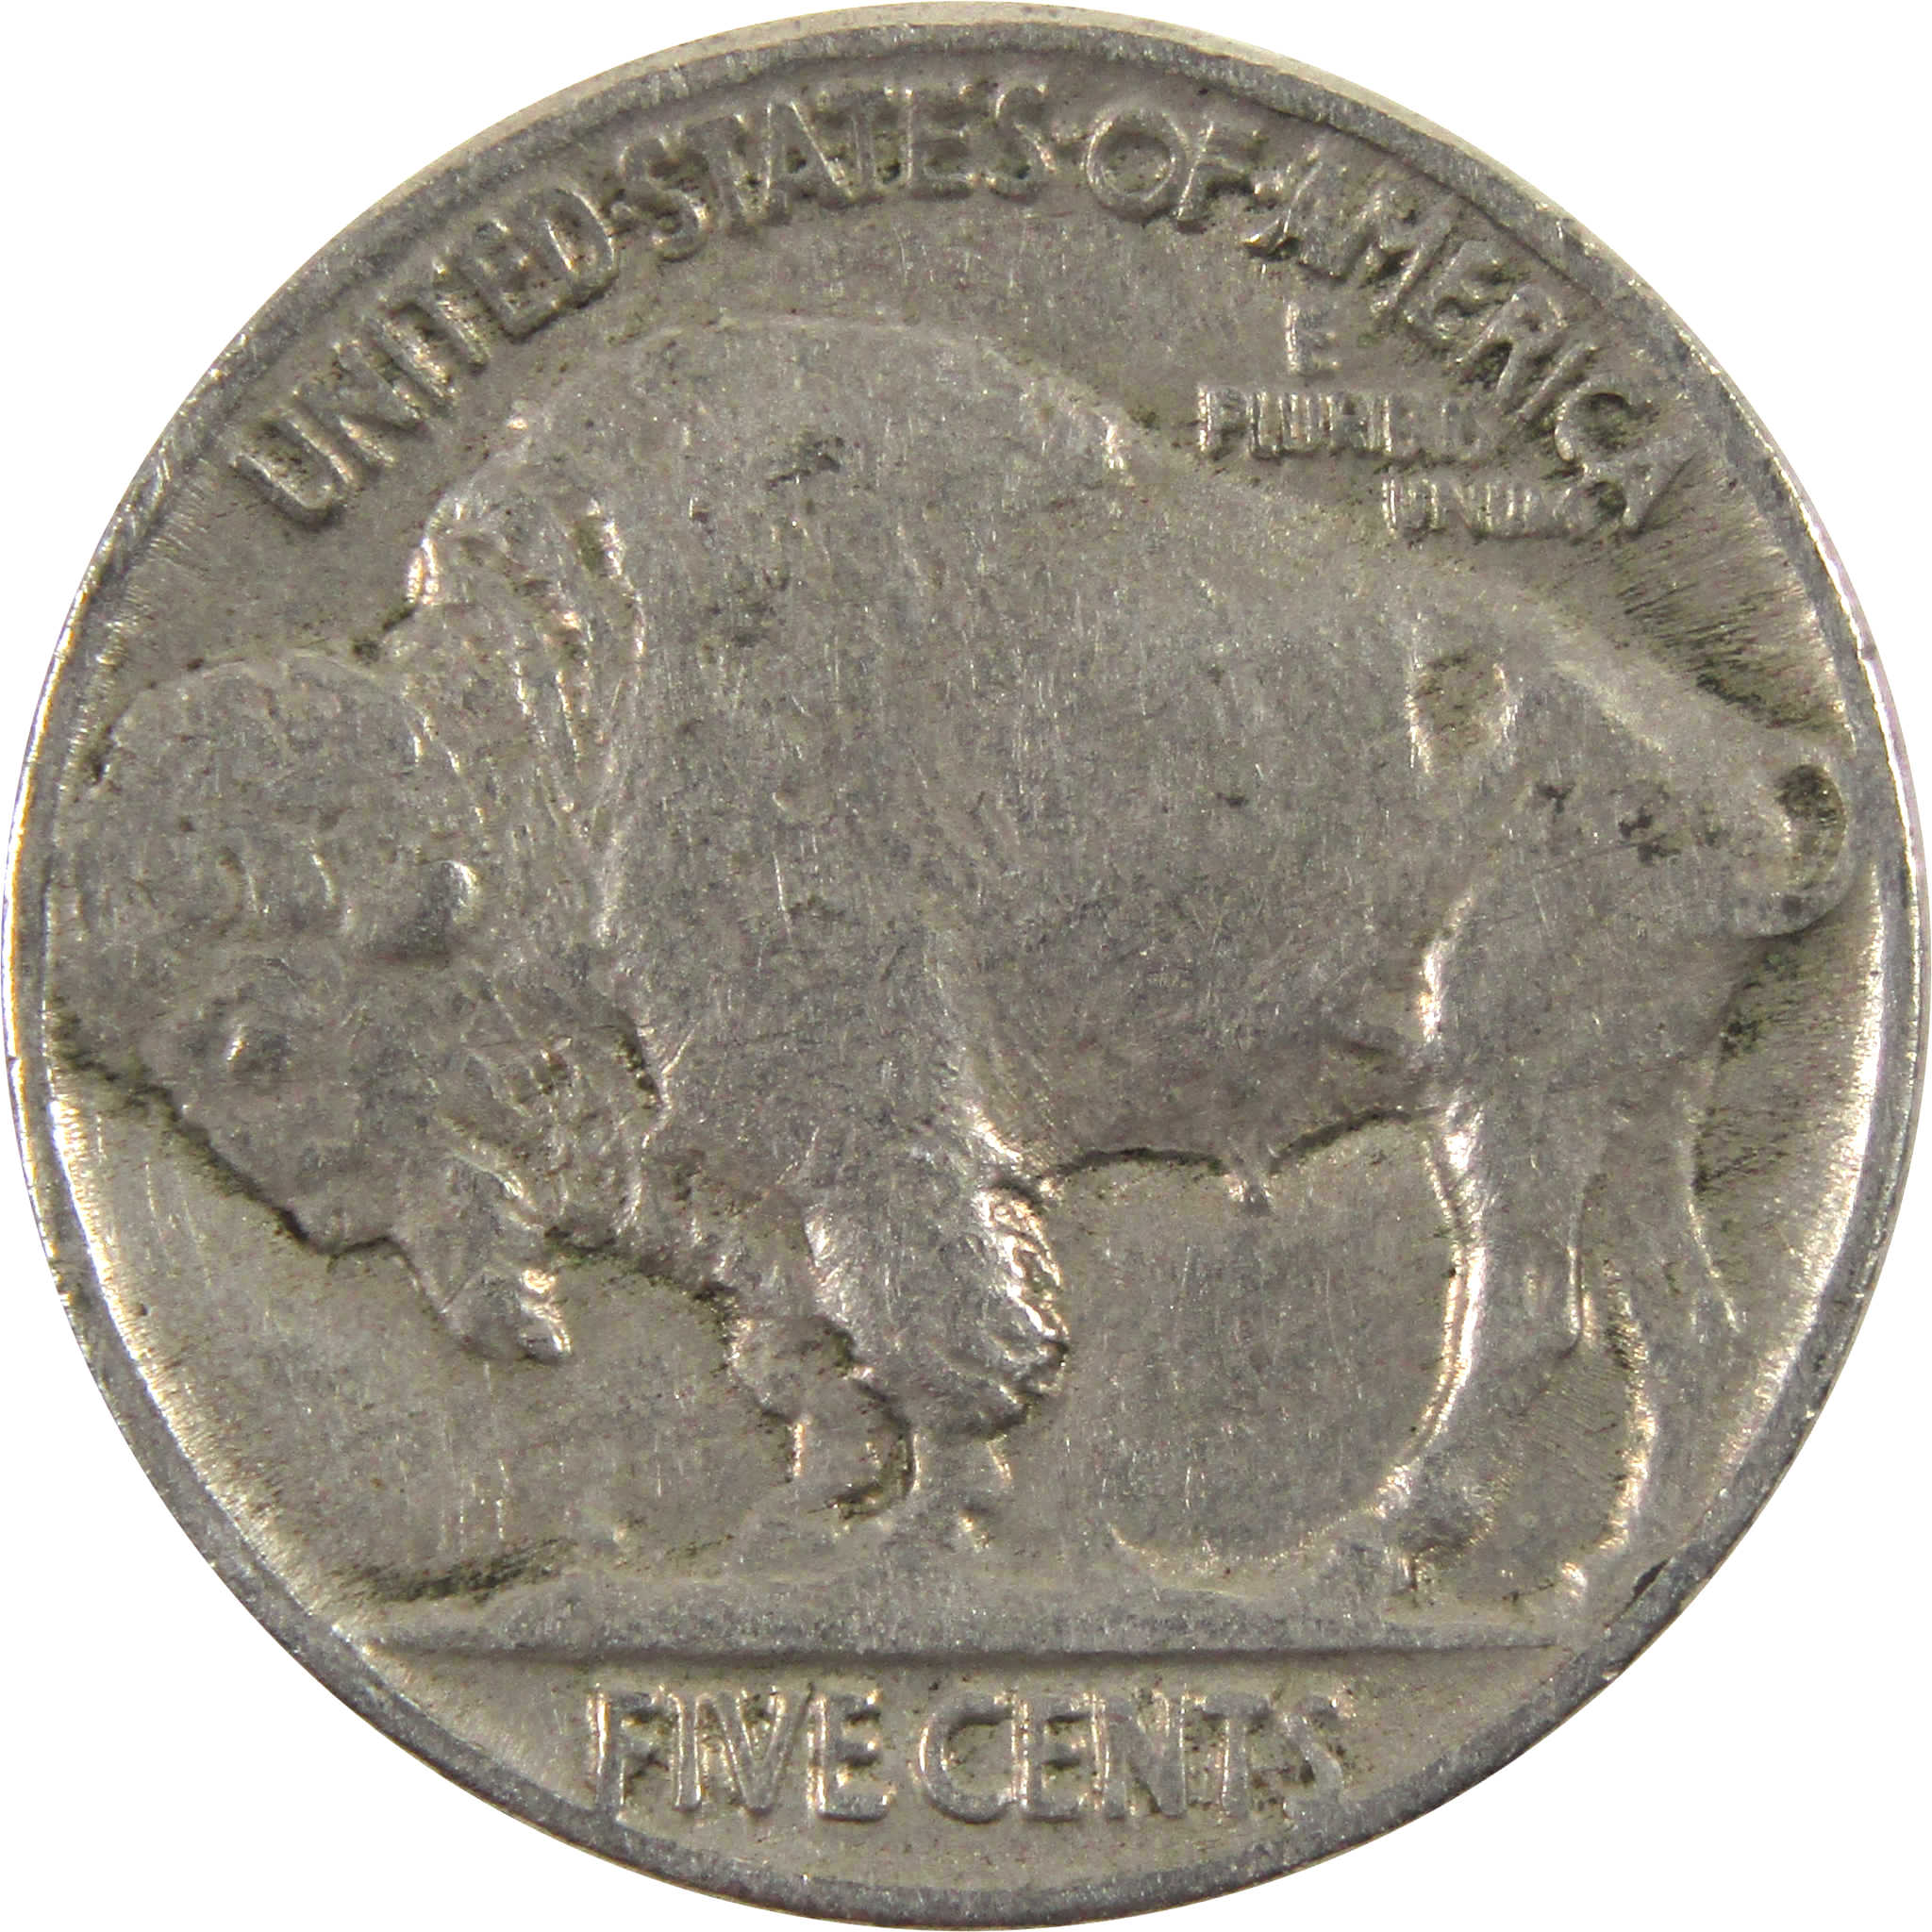 1936 Indian Head Buffalo Nickel VF Very Fine 5c Coin